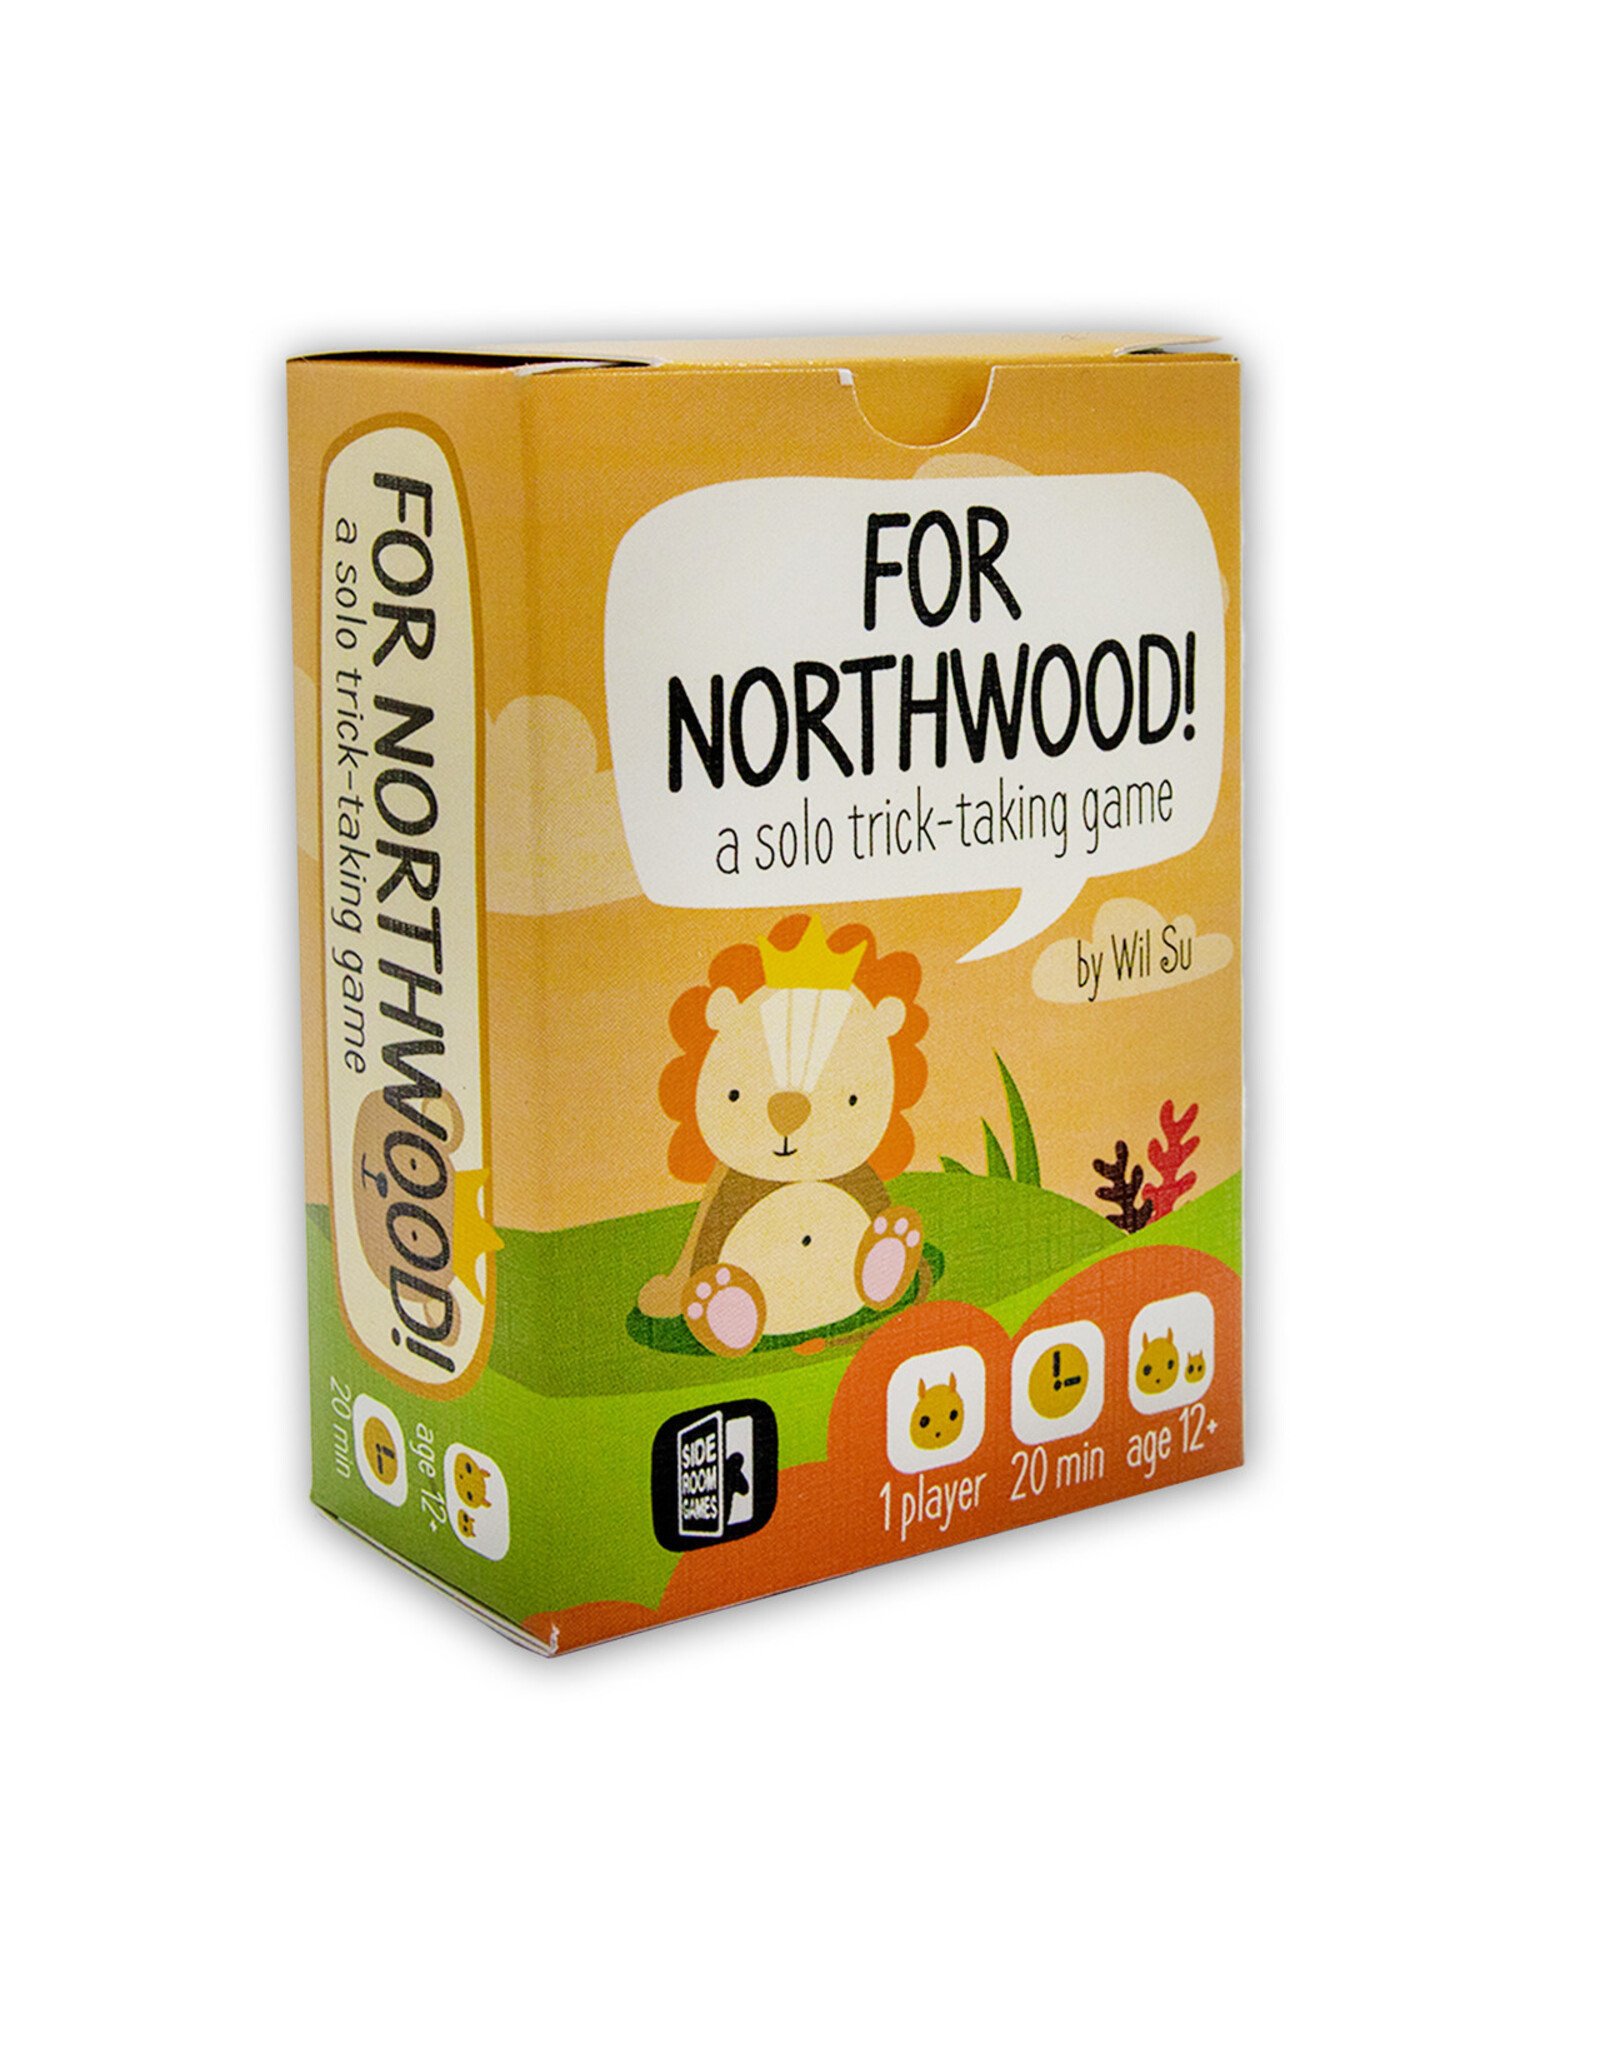 For Northwood!